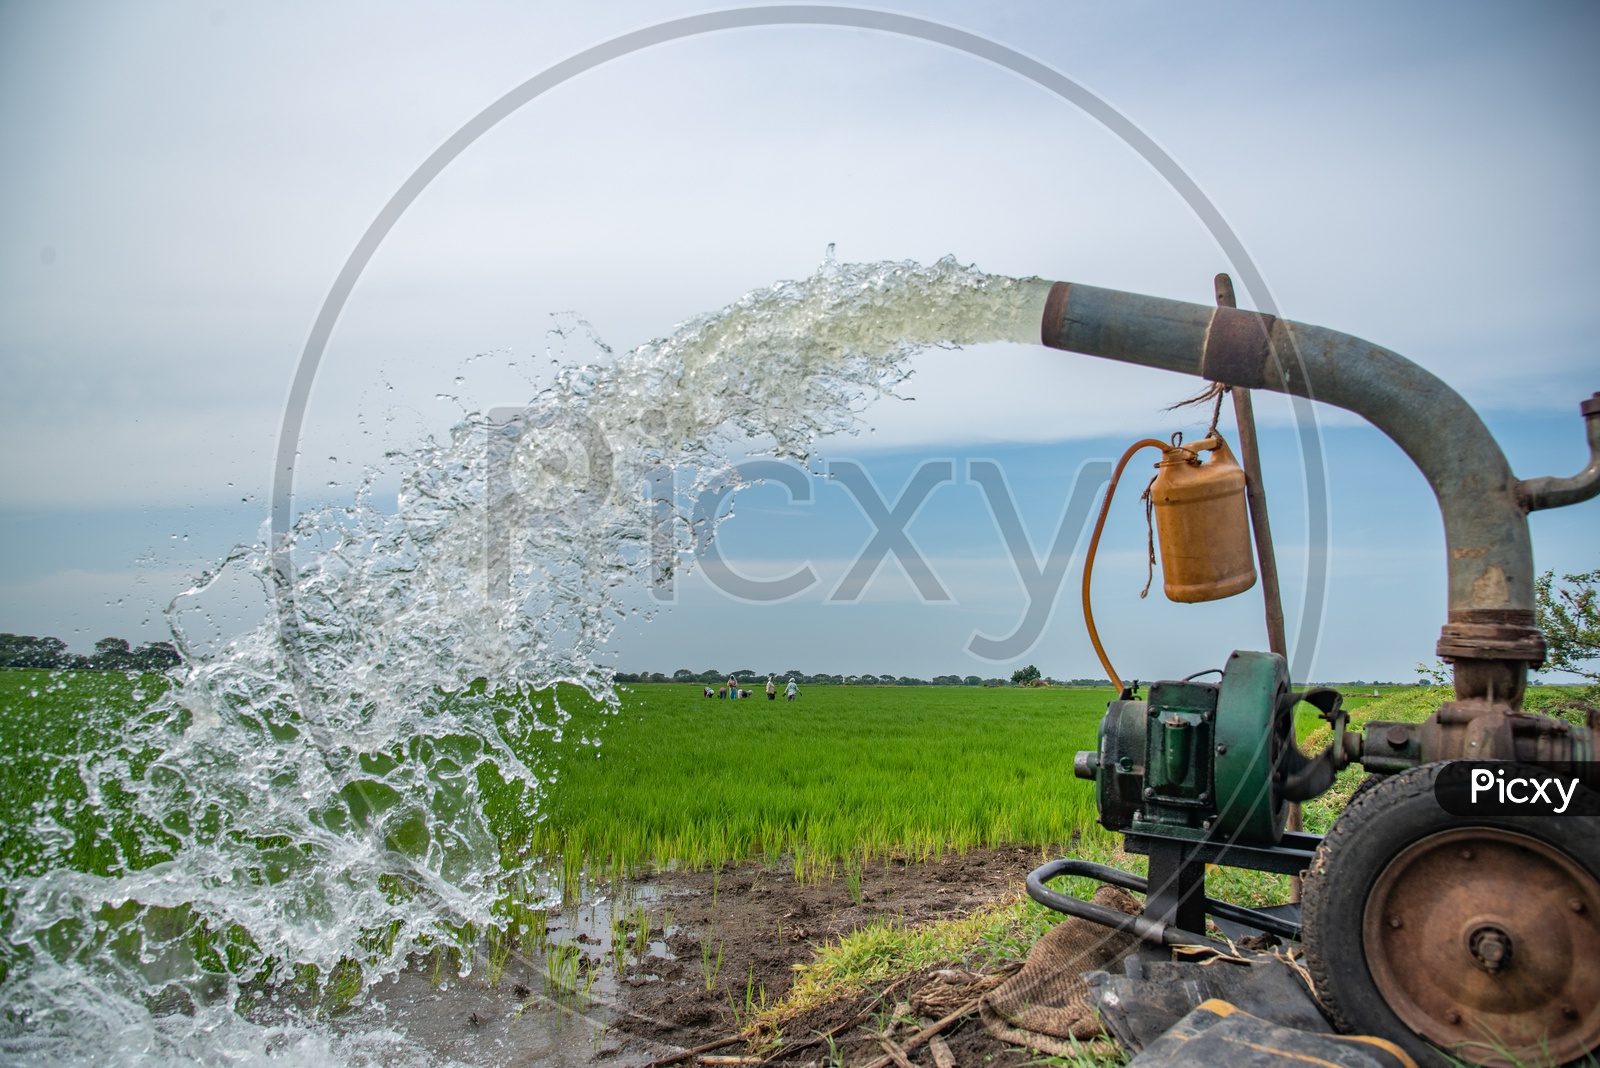 water ebing pumped into paddy fields using diesel water pump engines